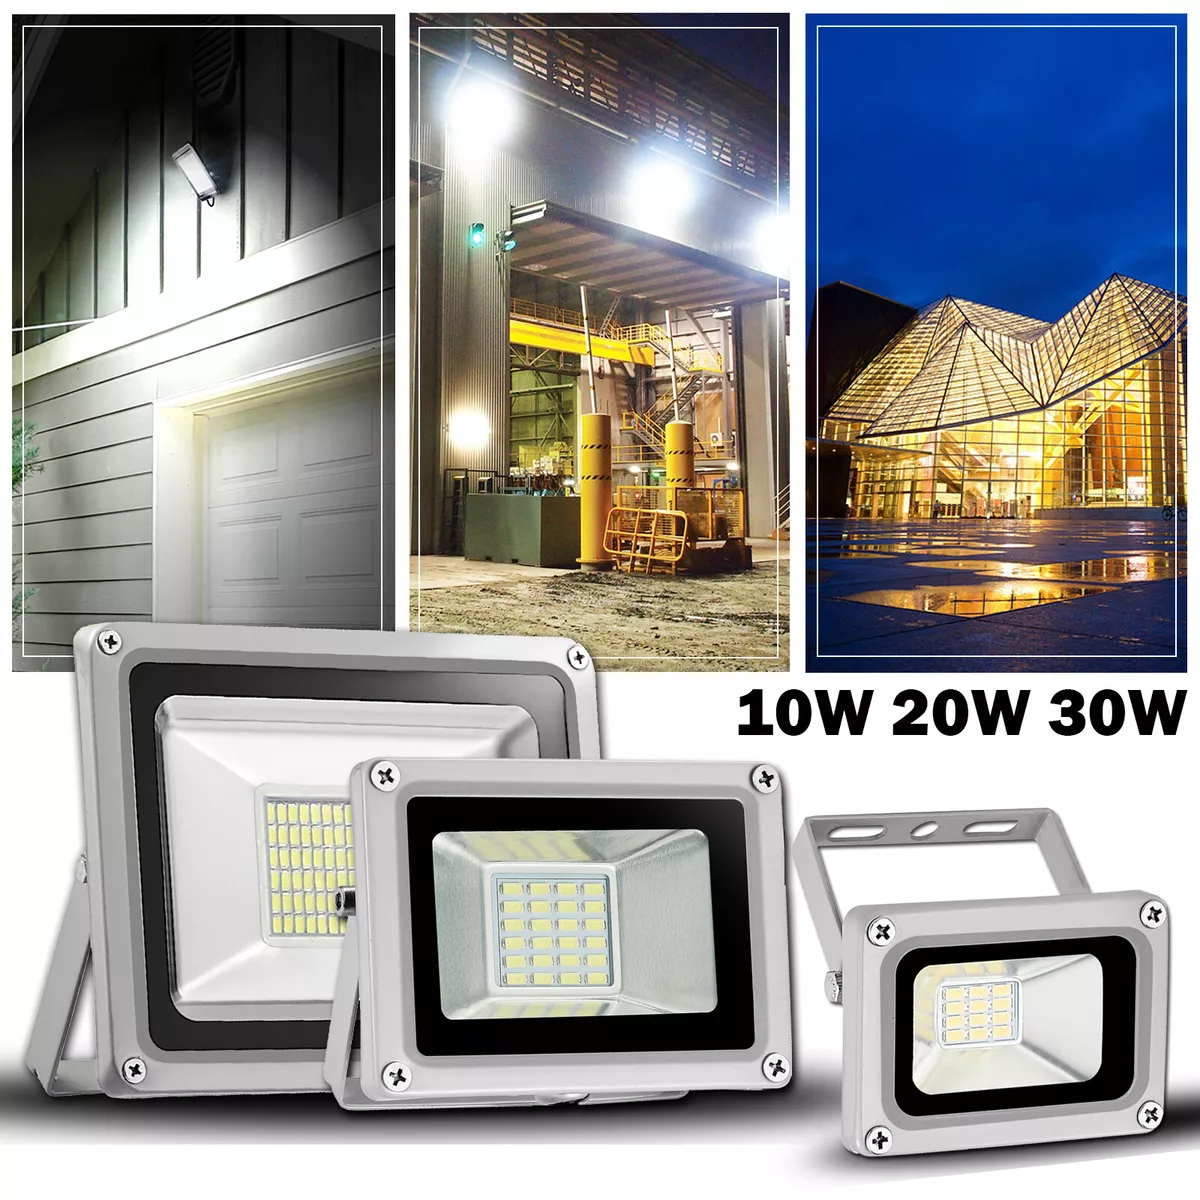 LED Flood Light 12V 10W 20W 30W Spotlight Security Yard Garden Ouoor Lamp